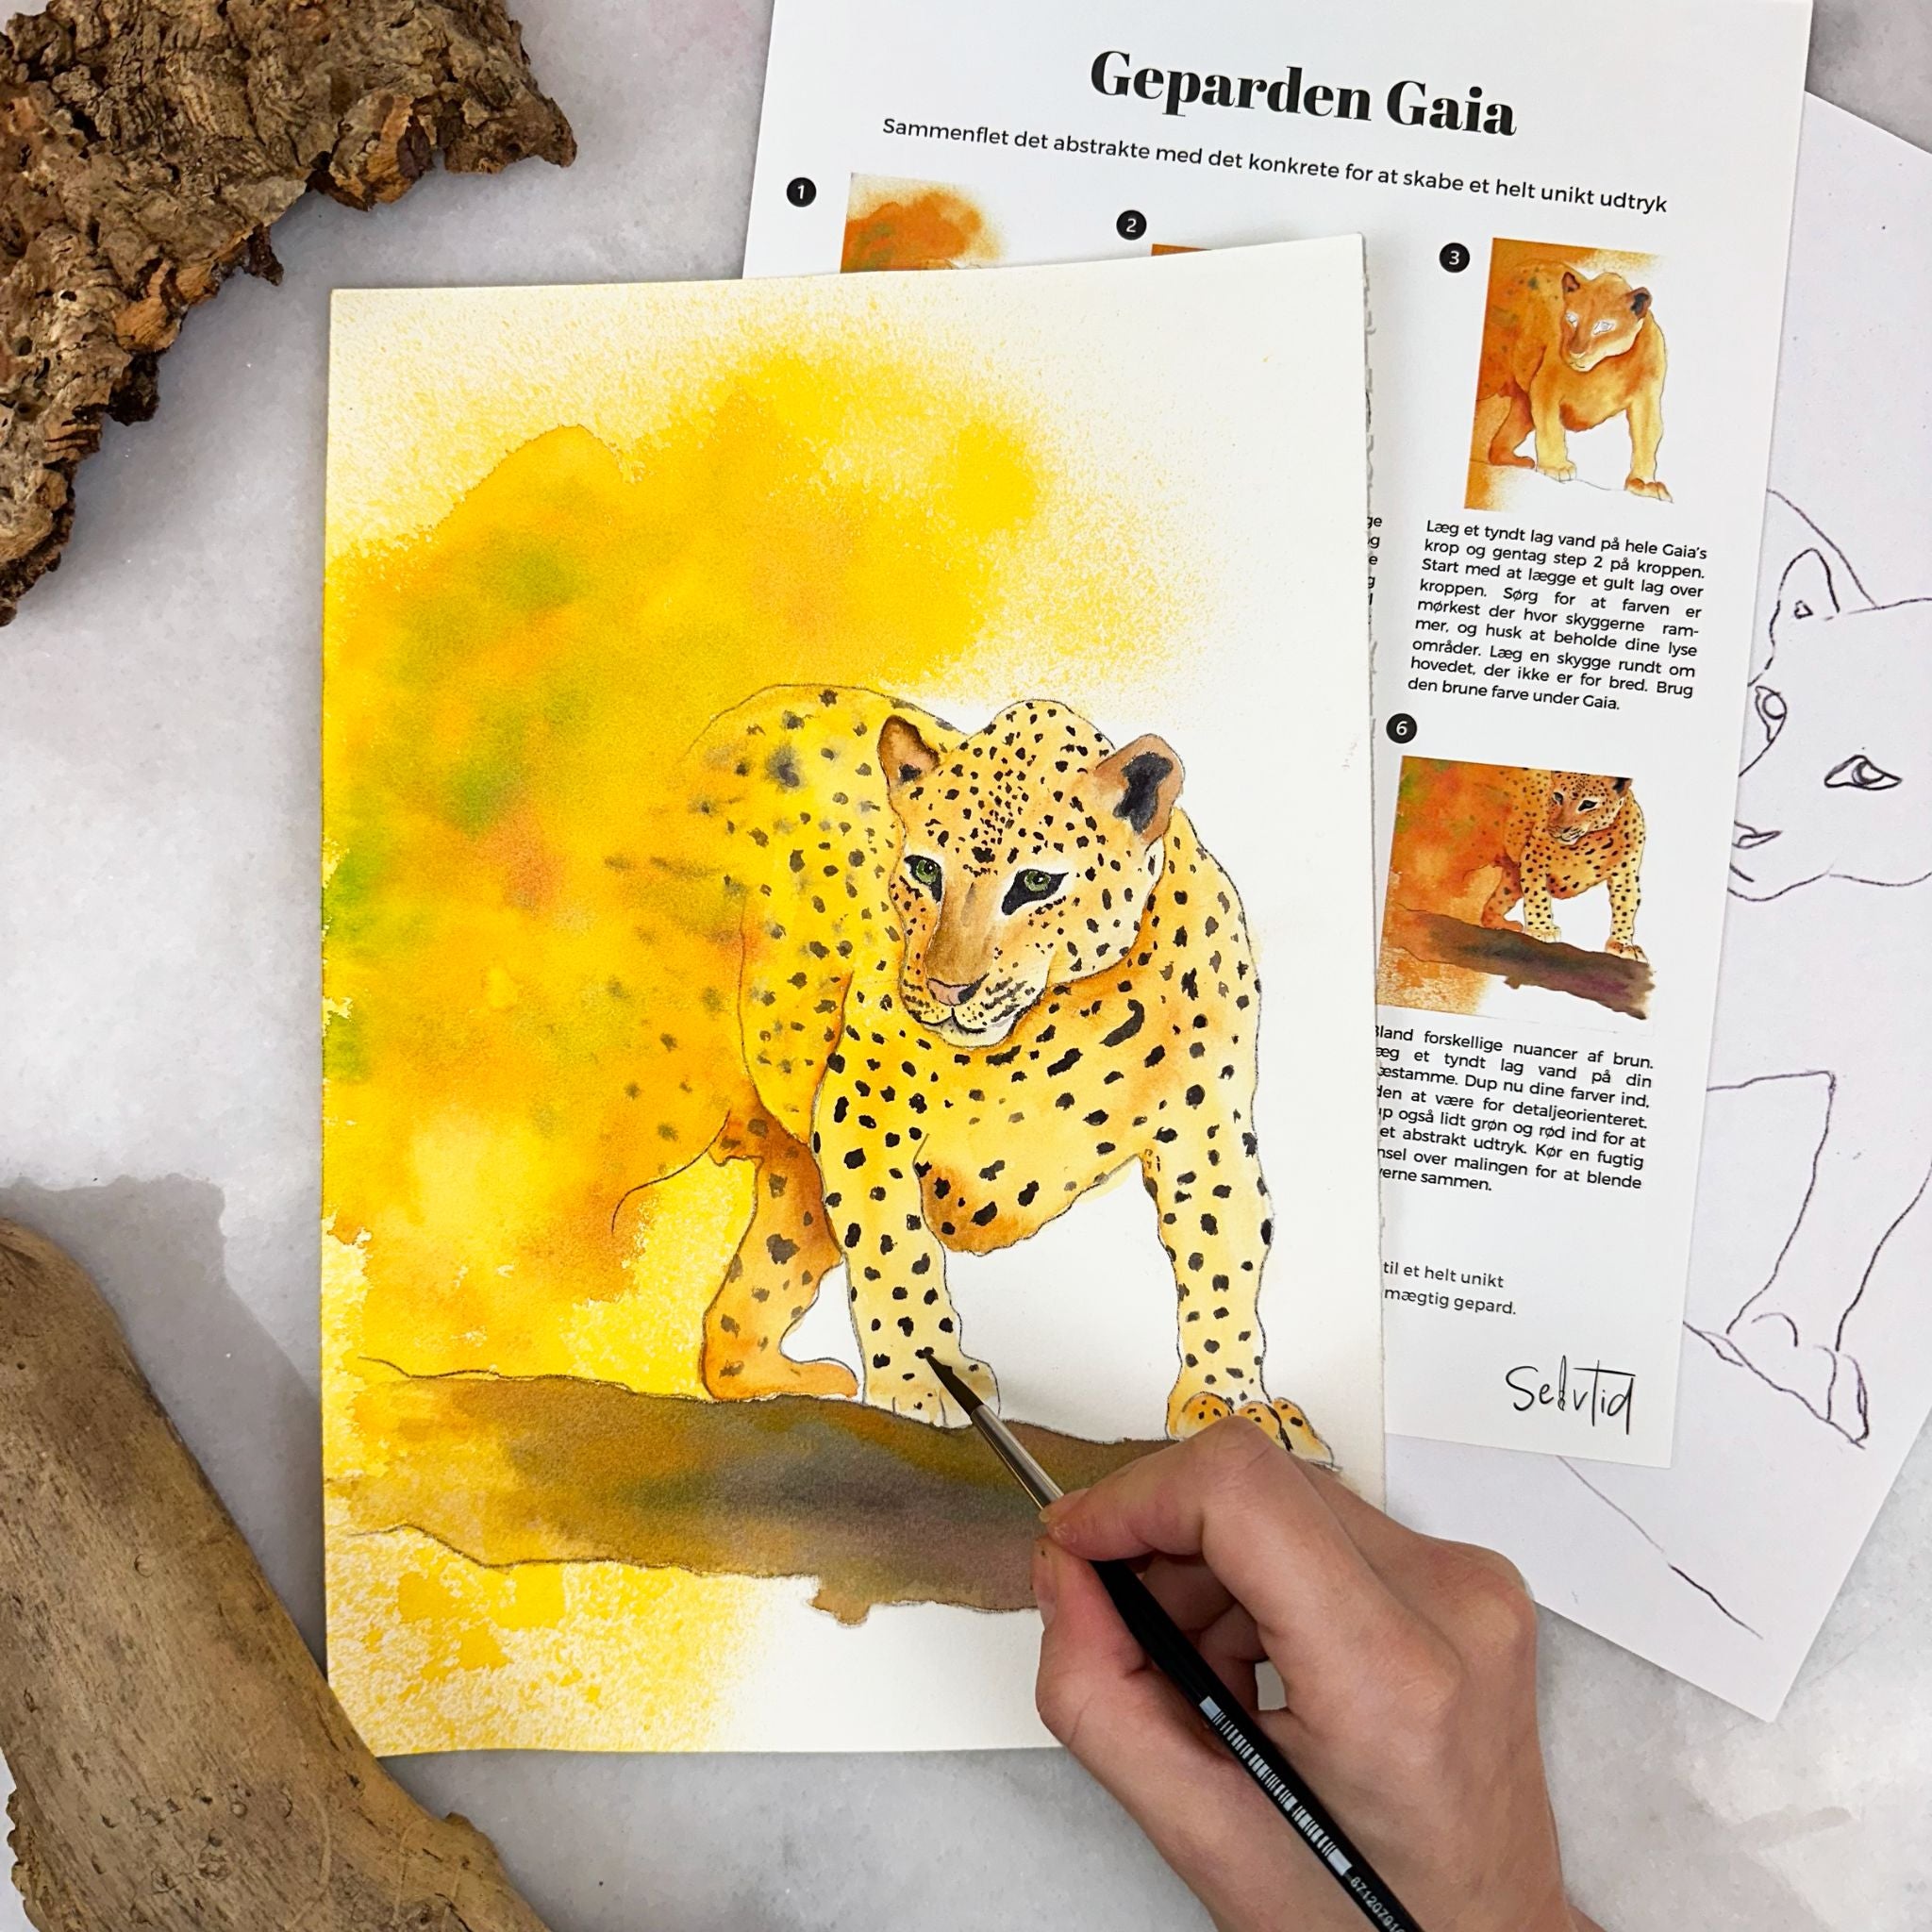 lær at male abstrakte malerier i akvarelmaling den abstrakte boks gepard med sprayflaske